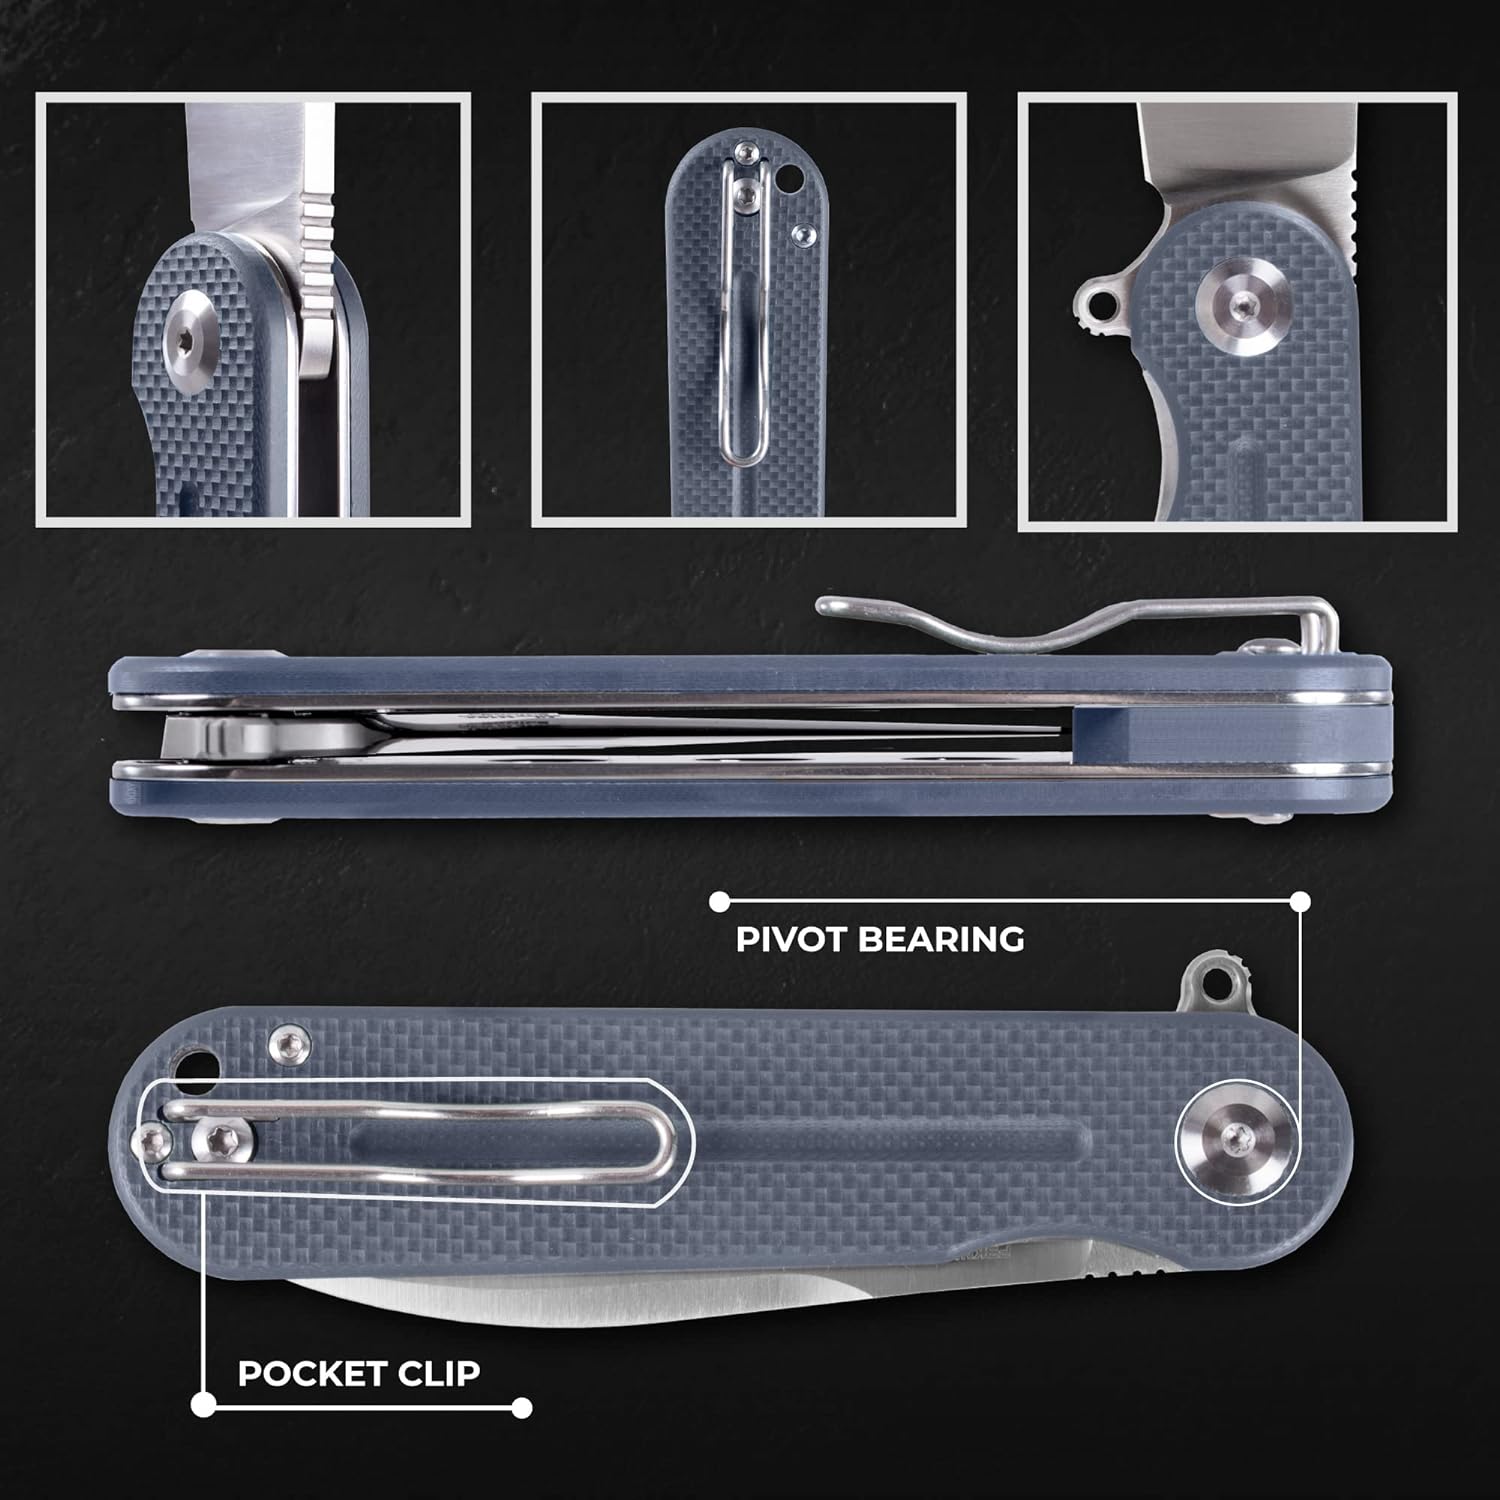 Firebird GANZO  FH922-GY EDC Folding Pocket Knife Razor Sharp D2 Stainless Steel Blade Ergonomic Anti-Slip G10 Handle with Clip Outdoor